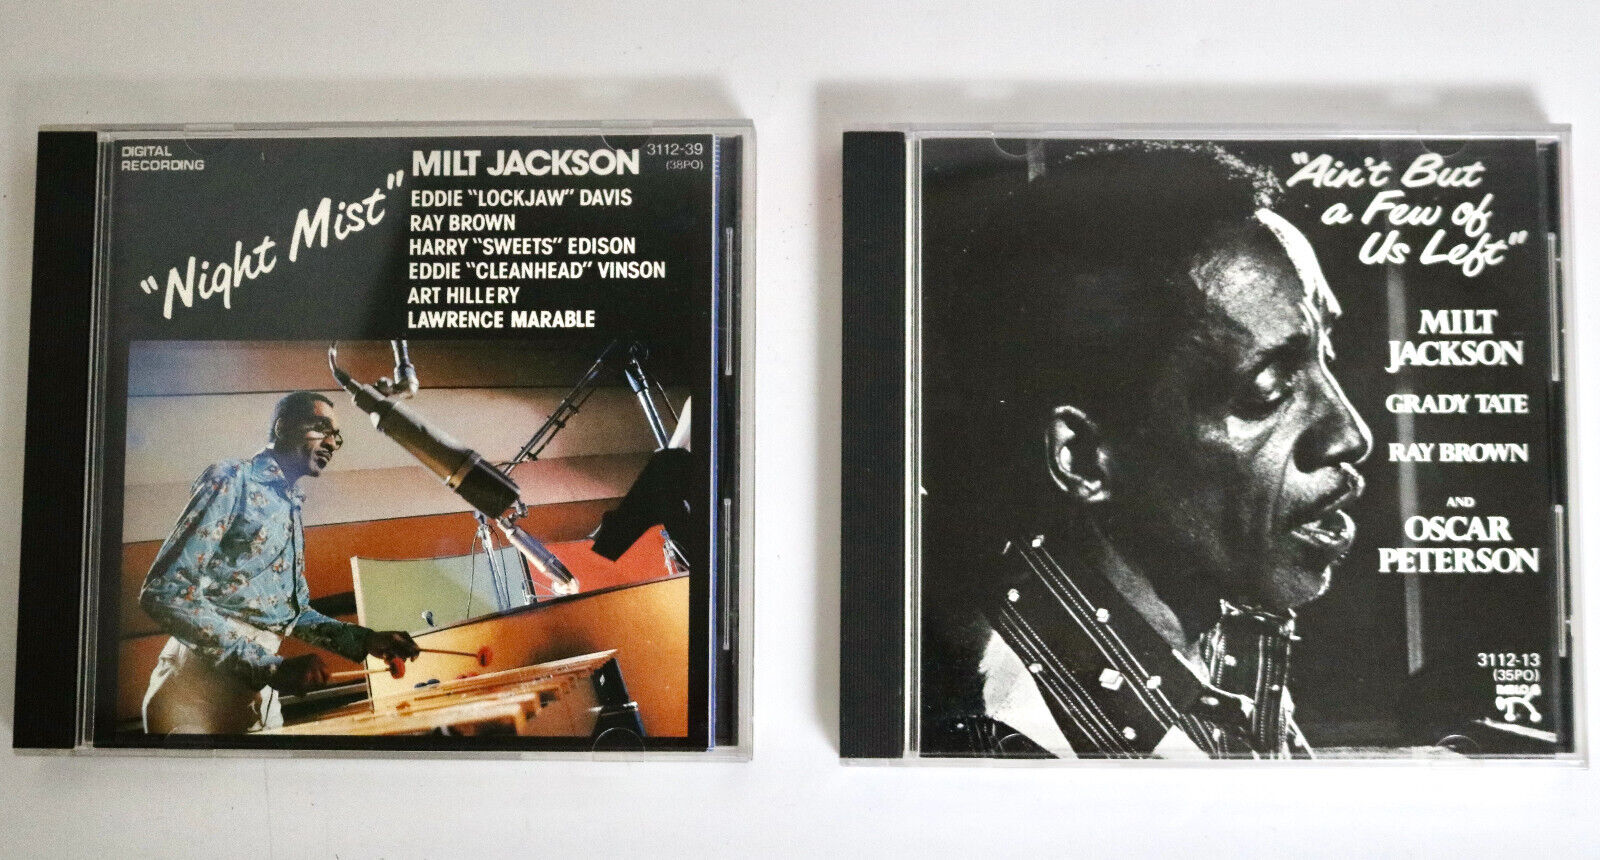 MILT JACKSON set of 2 Japanese import CDS Night Mist Few of Us